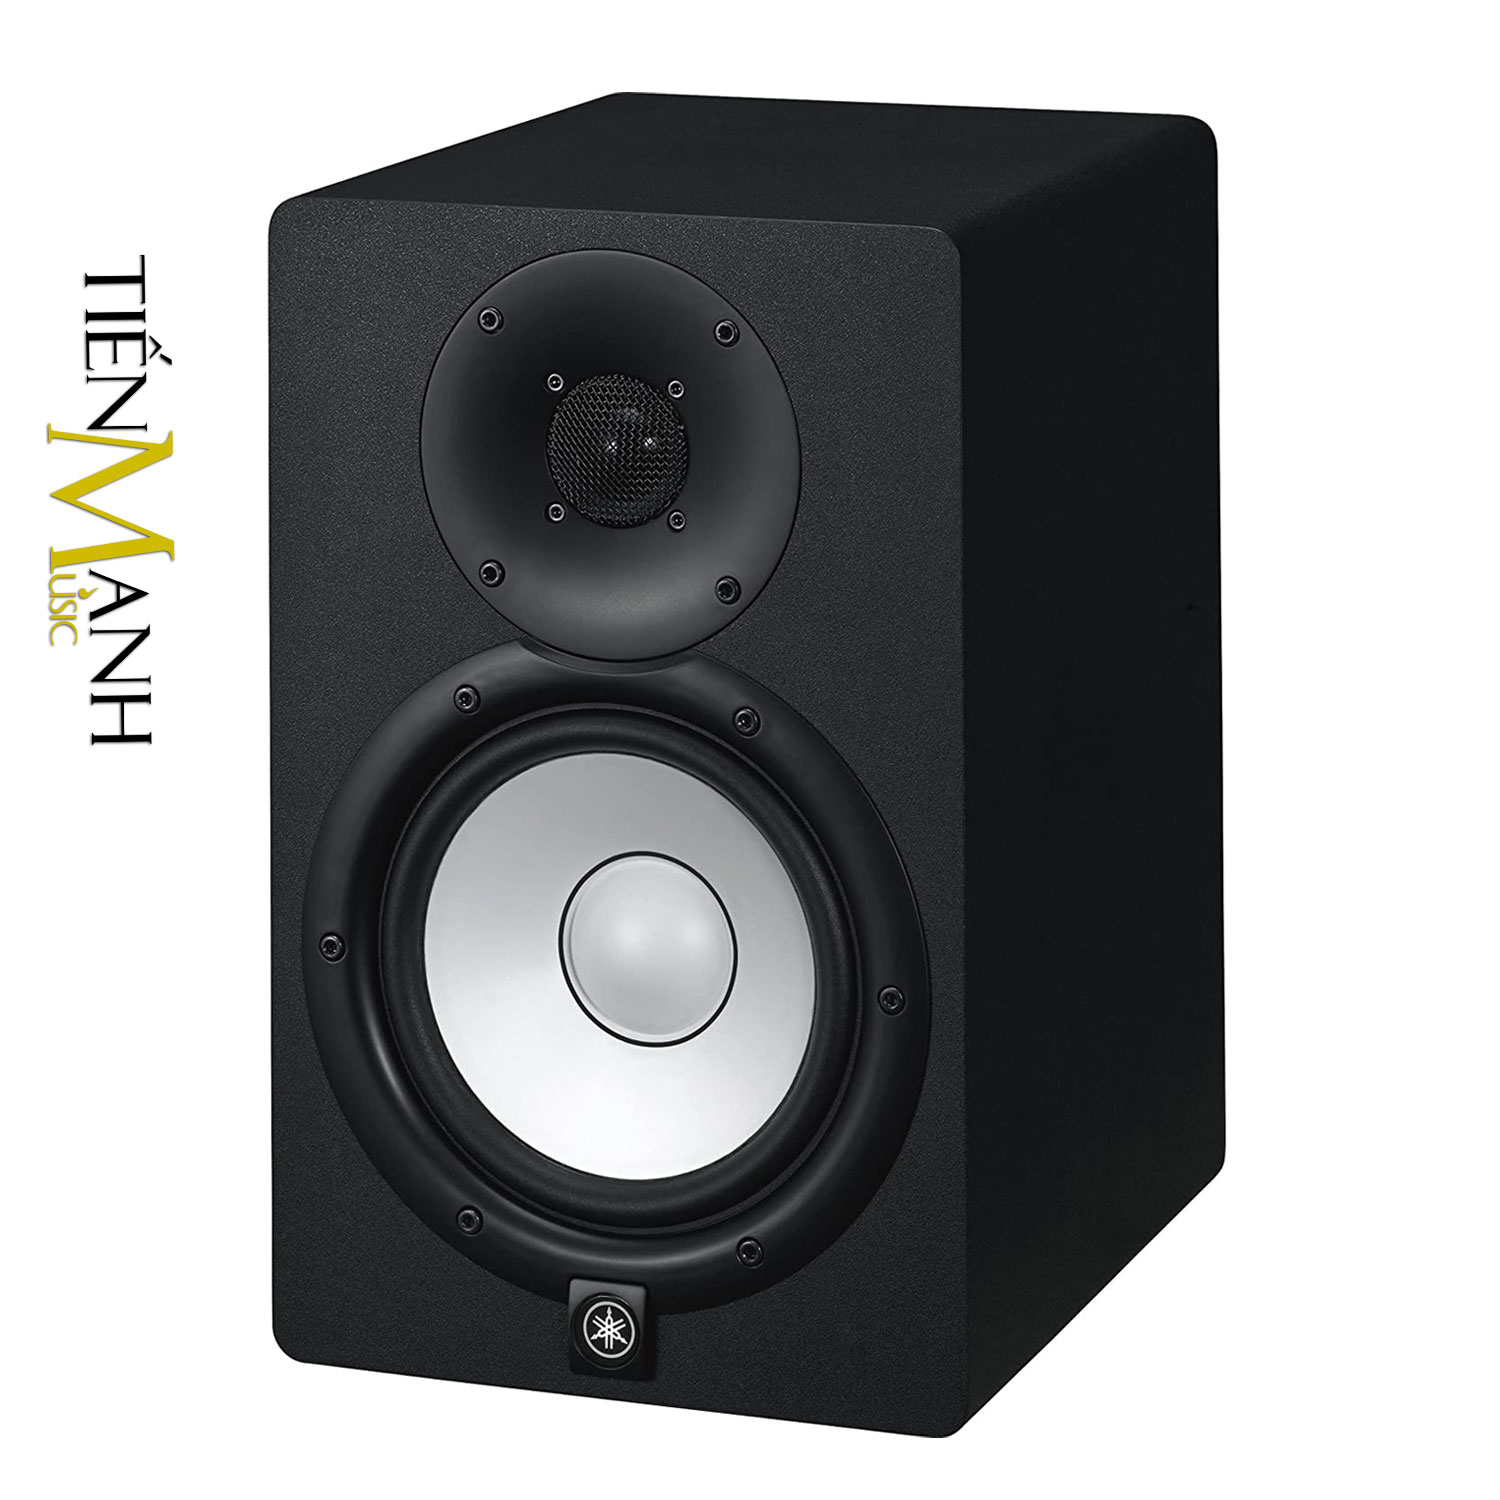 Gia-re-Loa-Kiem-Am-Yamaha-HS7-Powered-Studio-Monitor-Speaker-Den.jpg